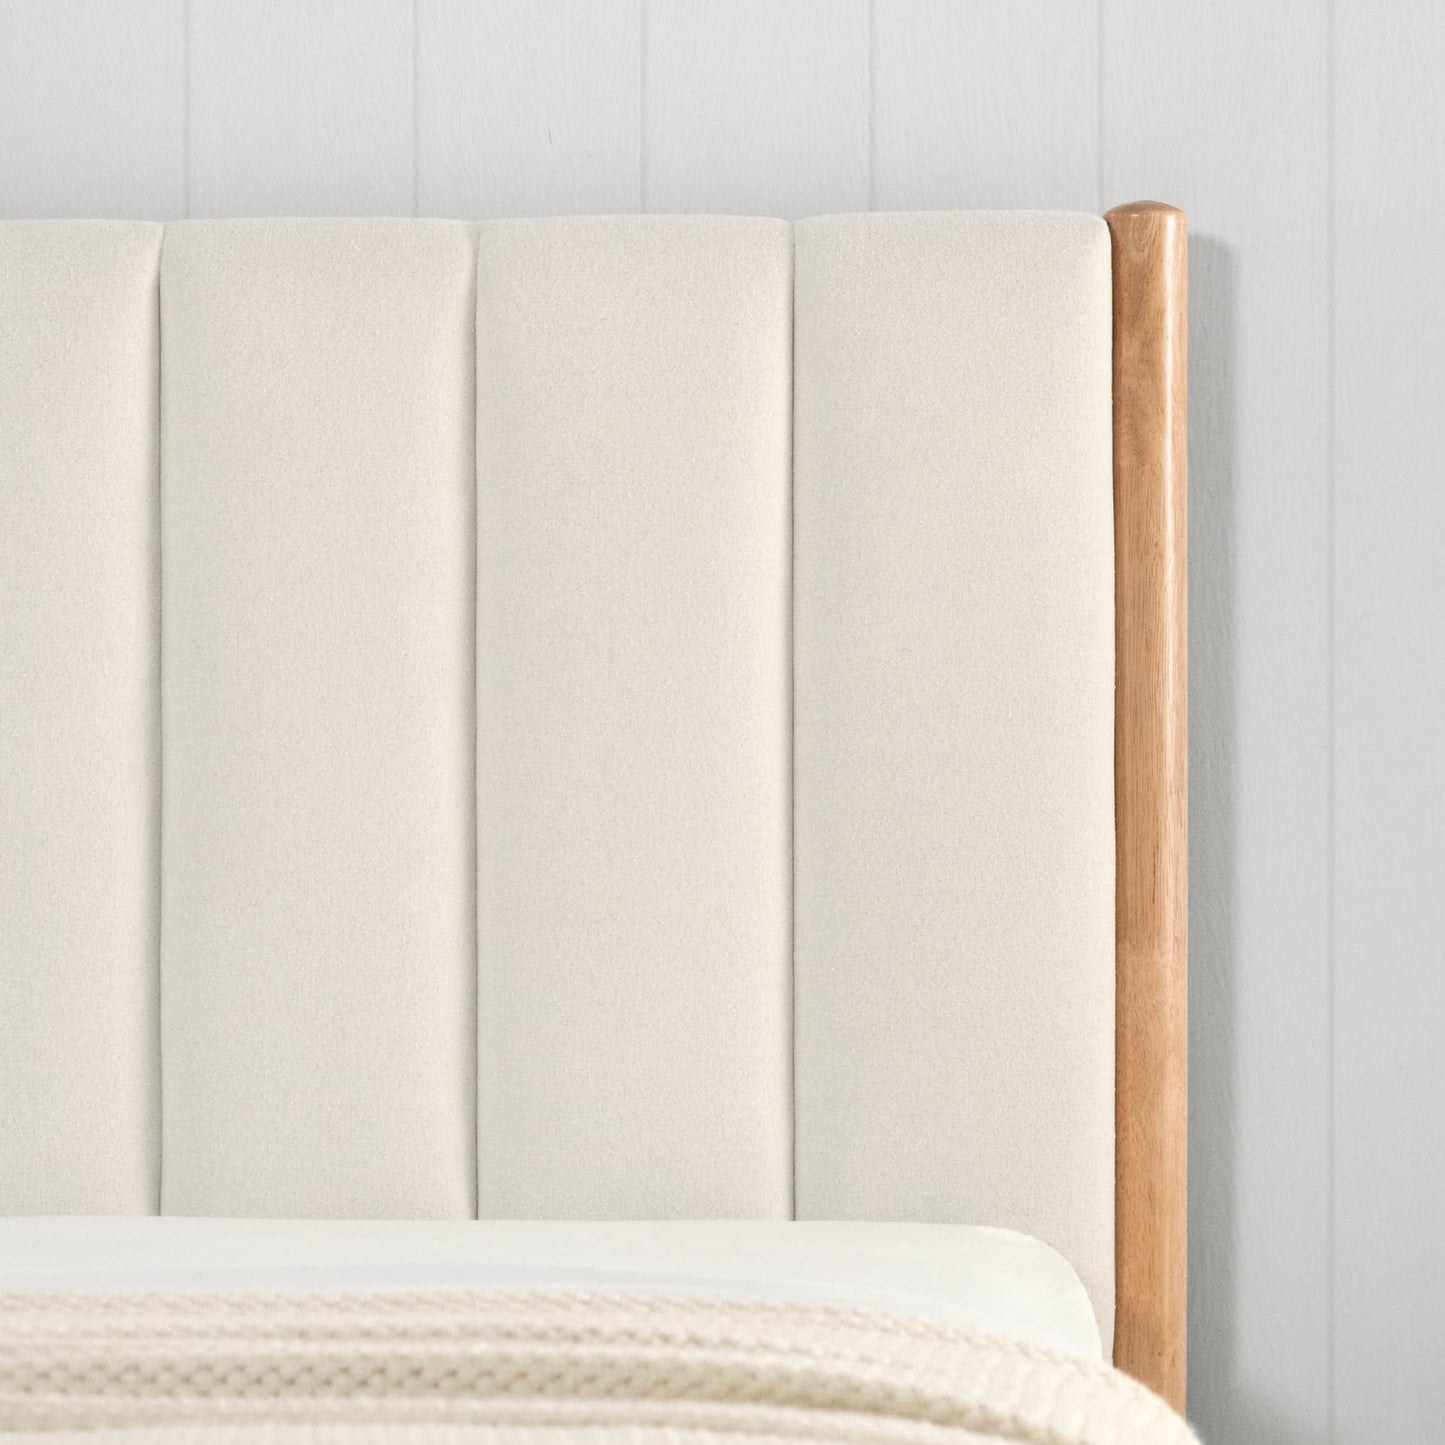 Serene Queen Contemporary Upholstered Platform Bed